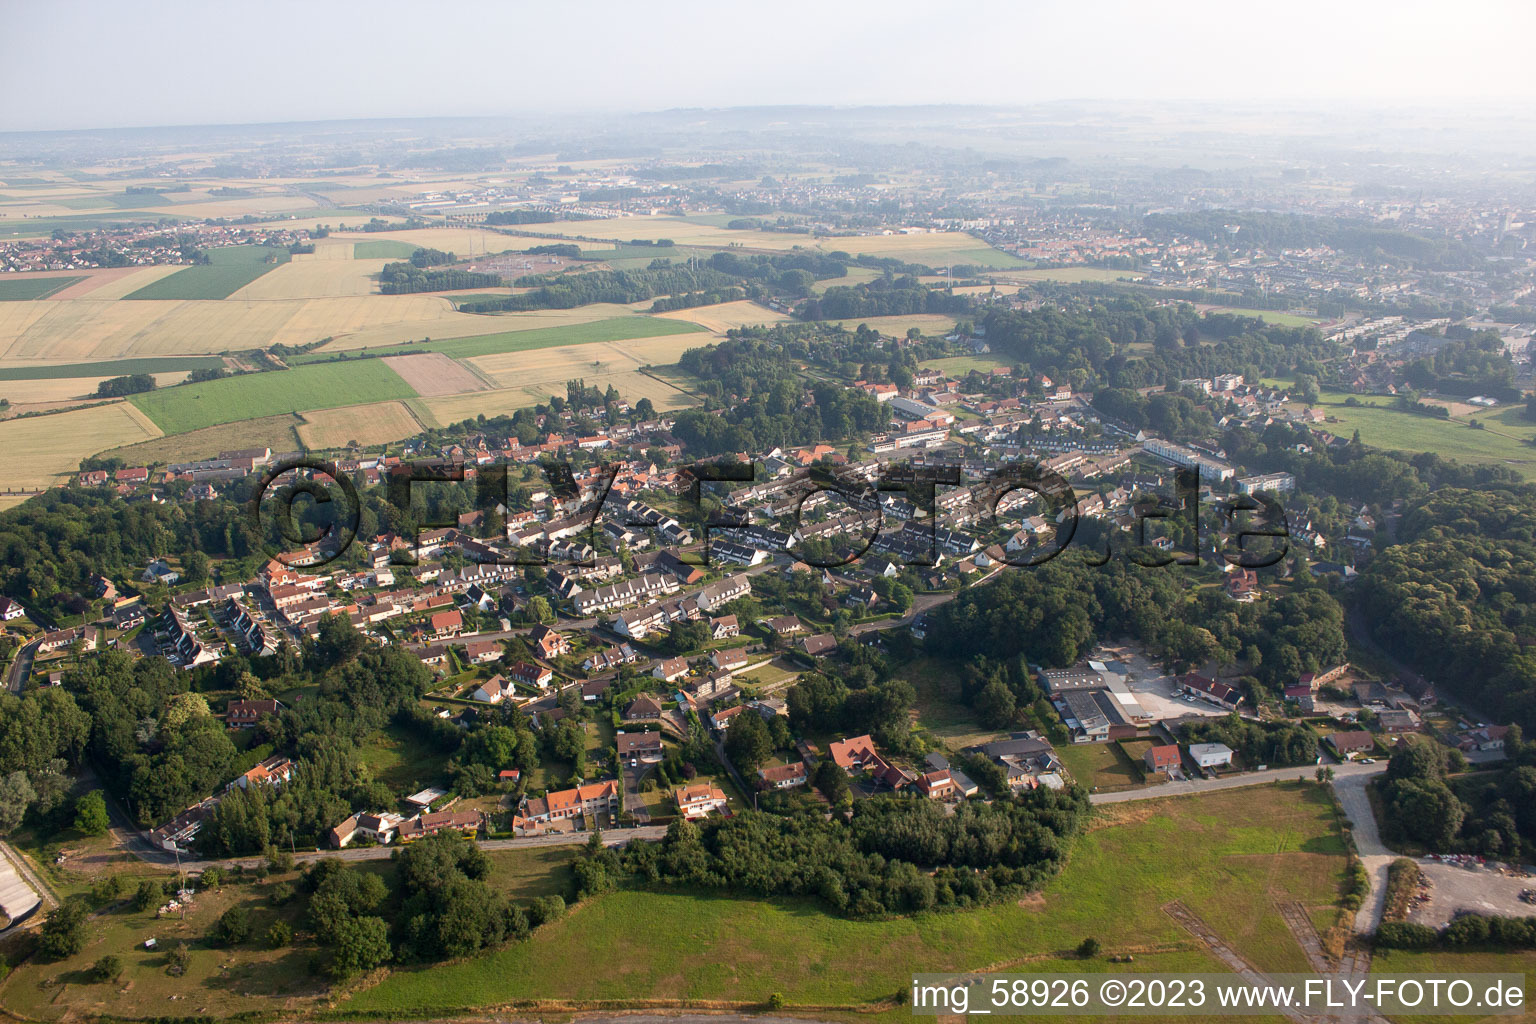 Luftbild von Longuenesse im Bundesland Pas-de-Calais, Frankreich